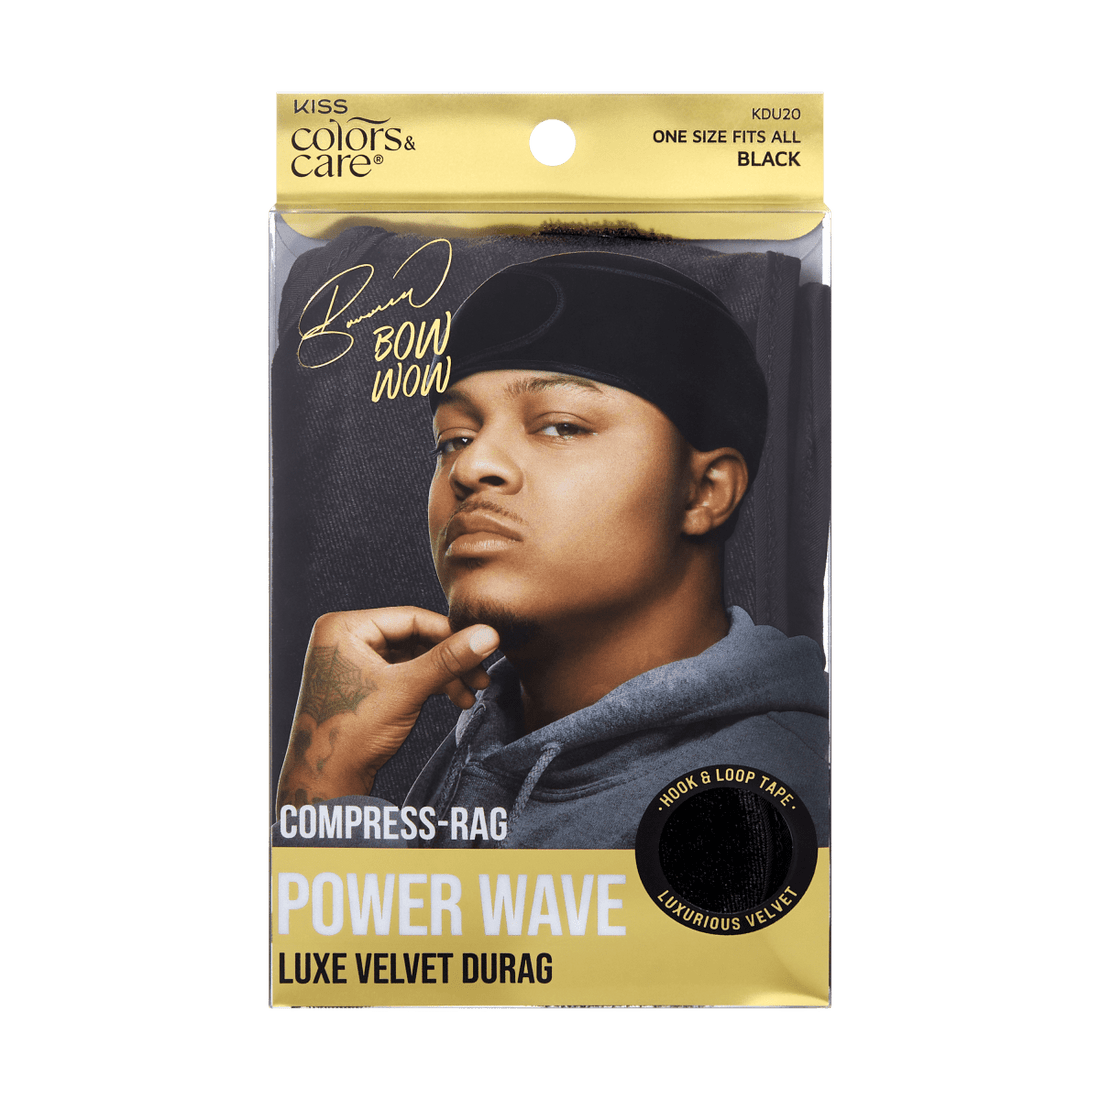 KISS Colors &amp; Care Compress-Rag Power Wave Luxe Velvet Durag, Black